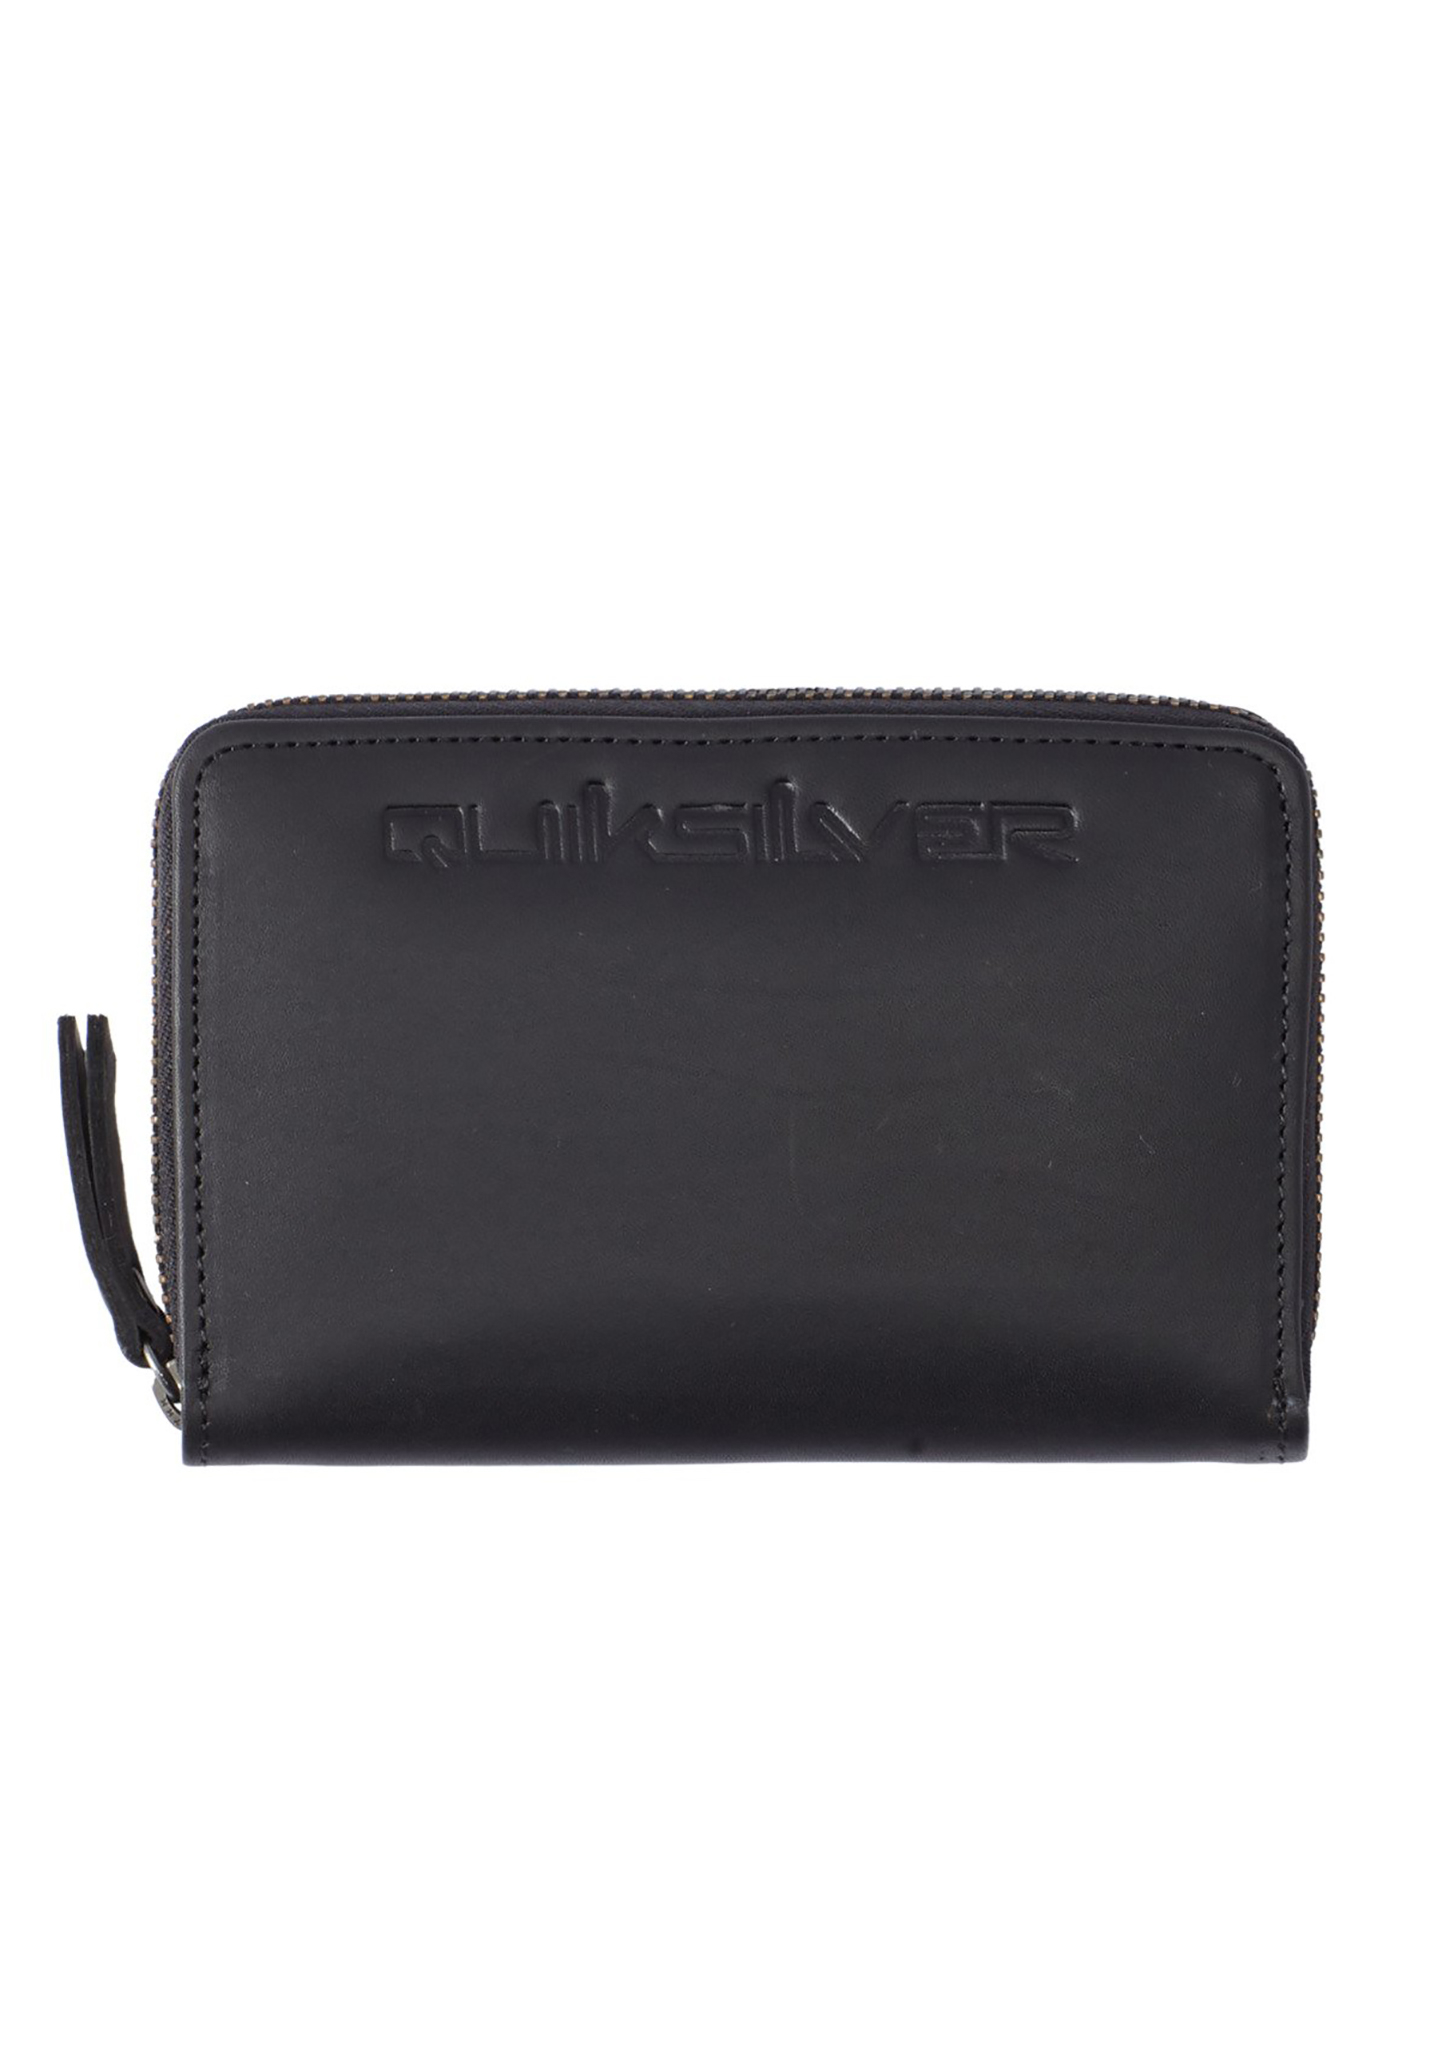 Quiksilver Zipperton Wallet black One Size